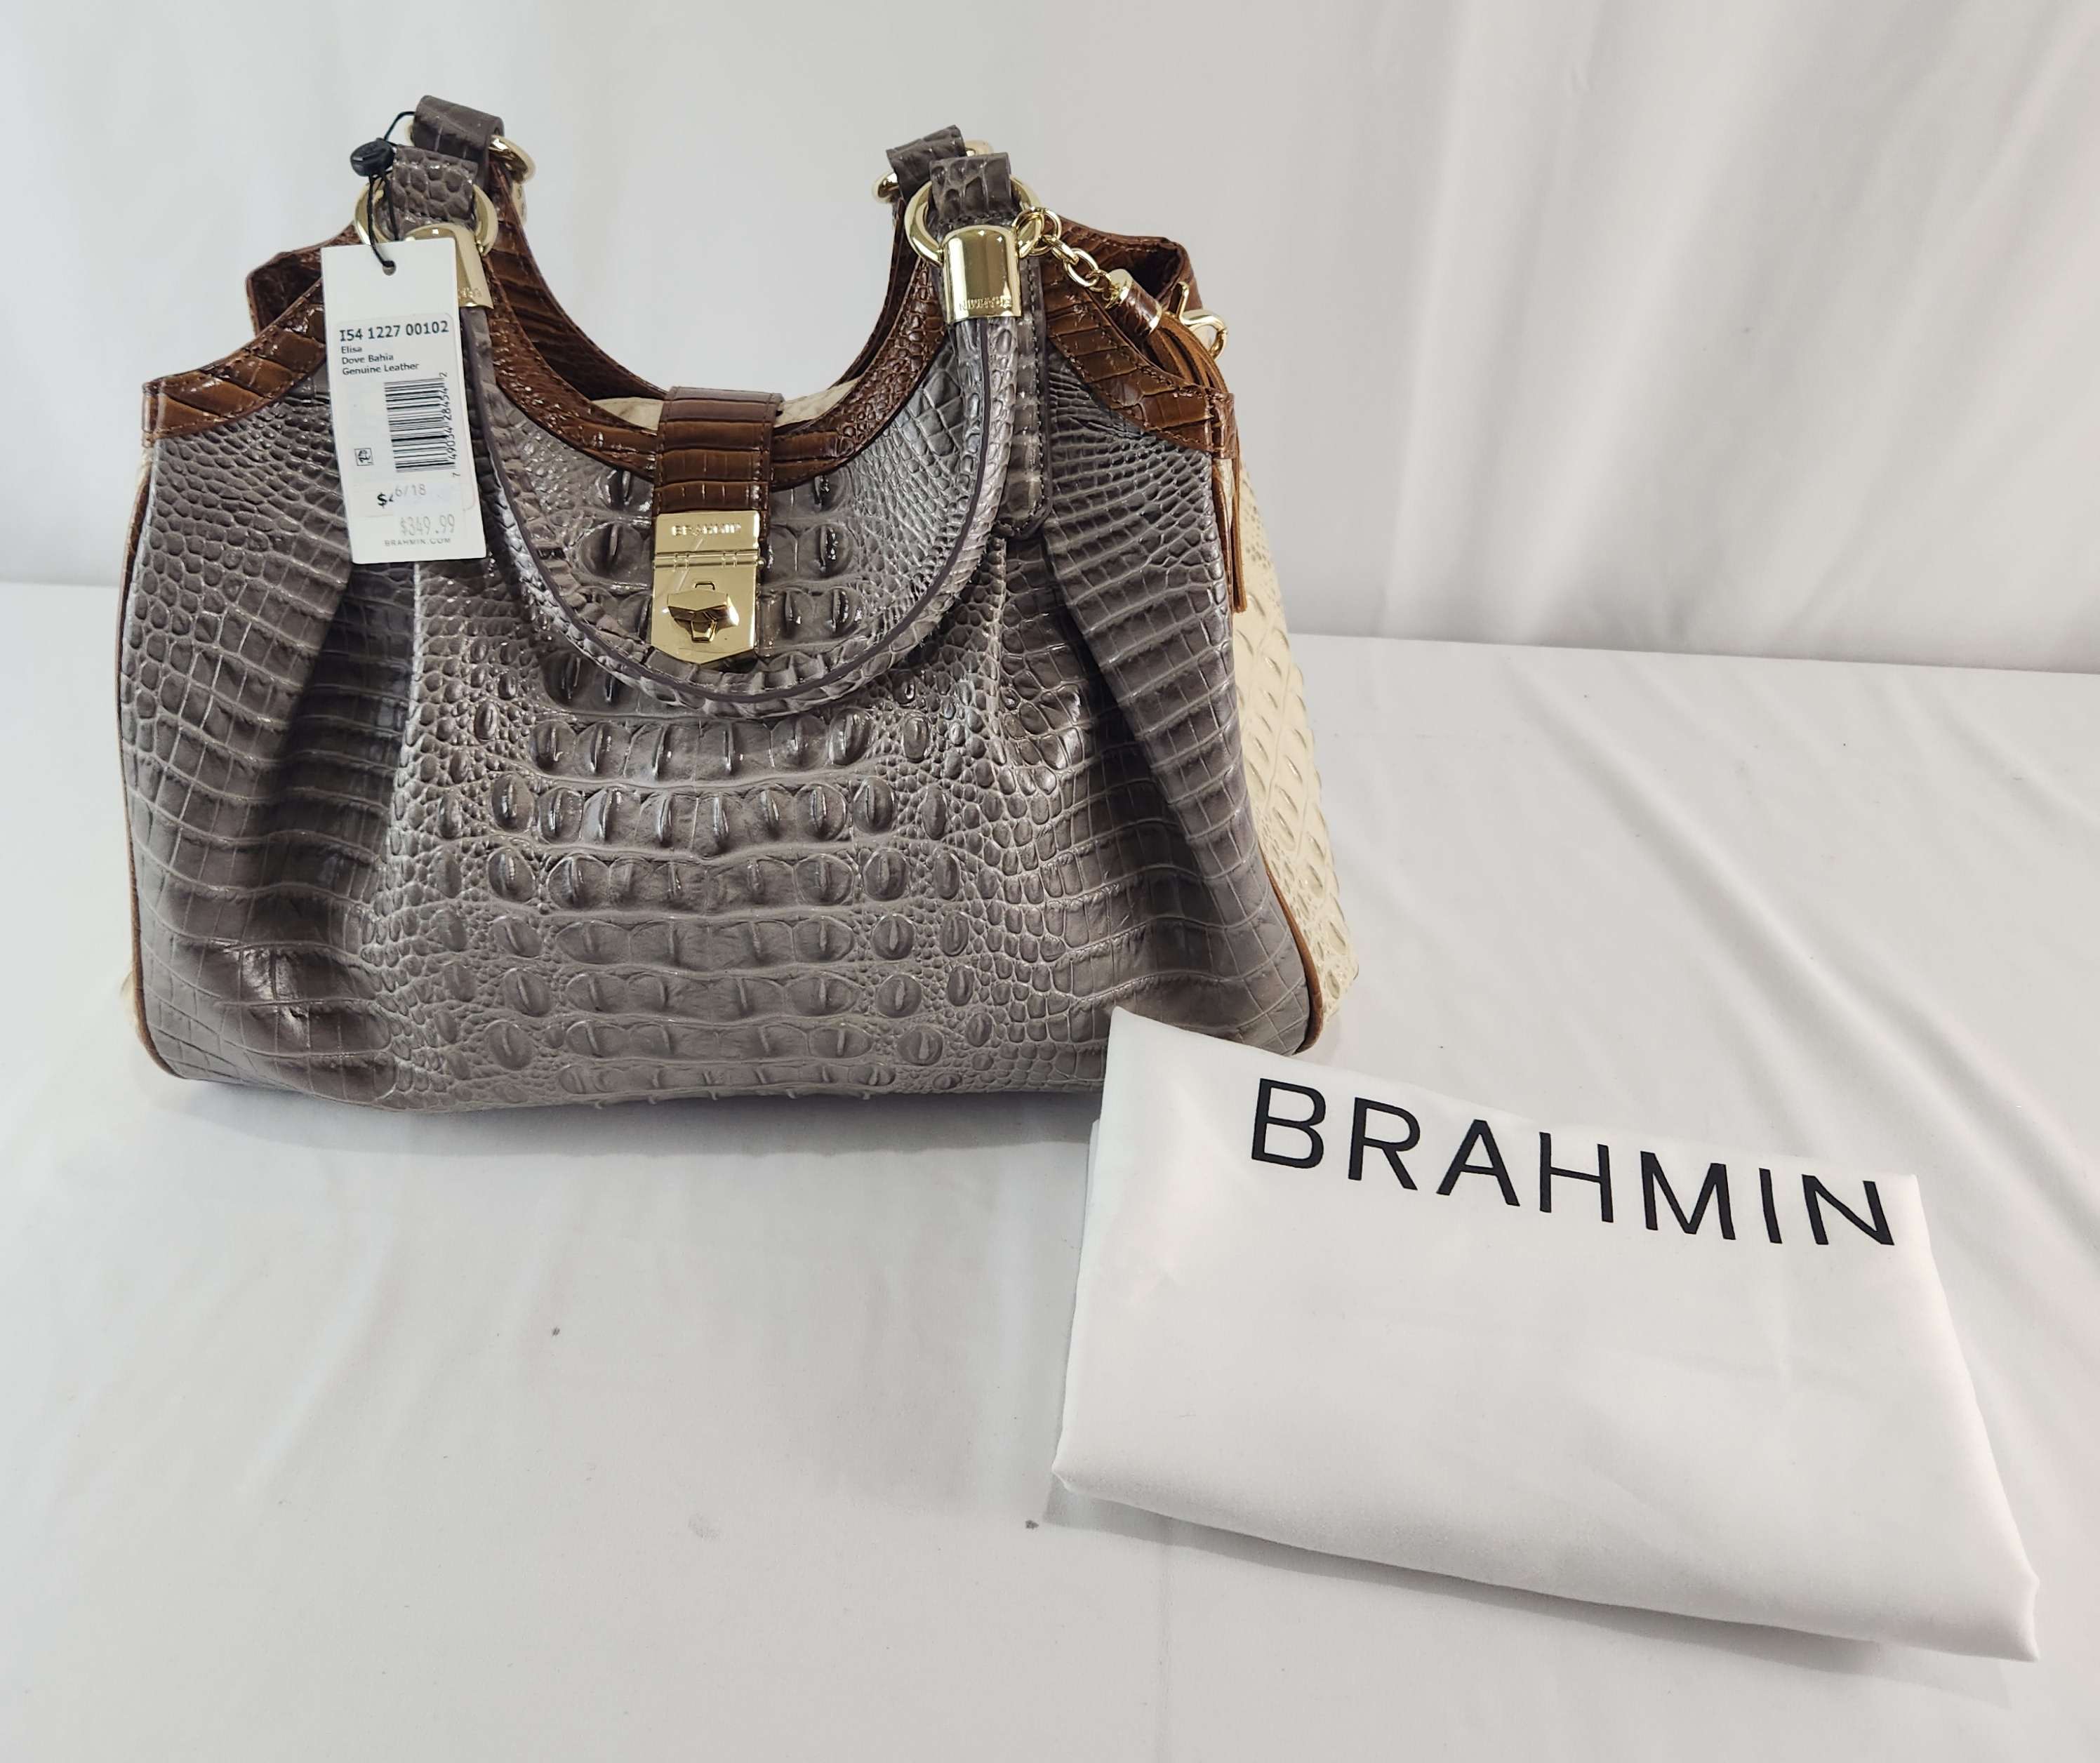 NWT Brahmin Handbag. Lime Green. - general for sale - by owner